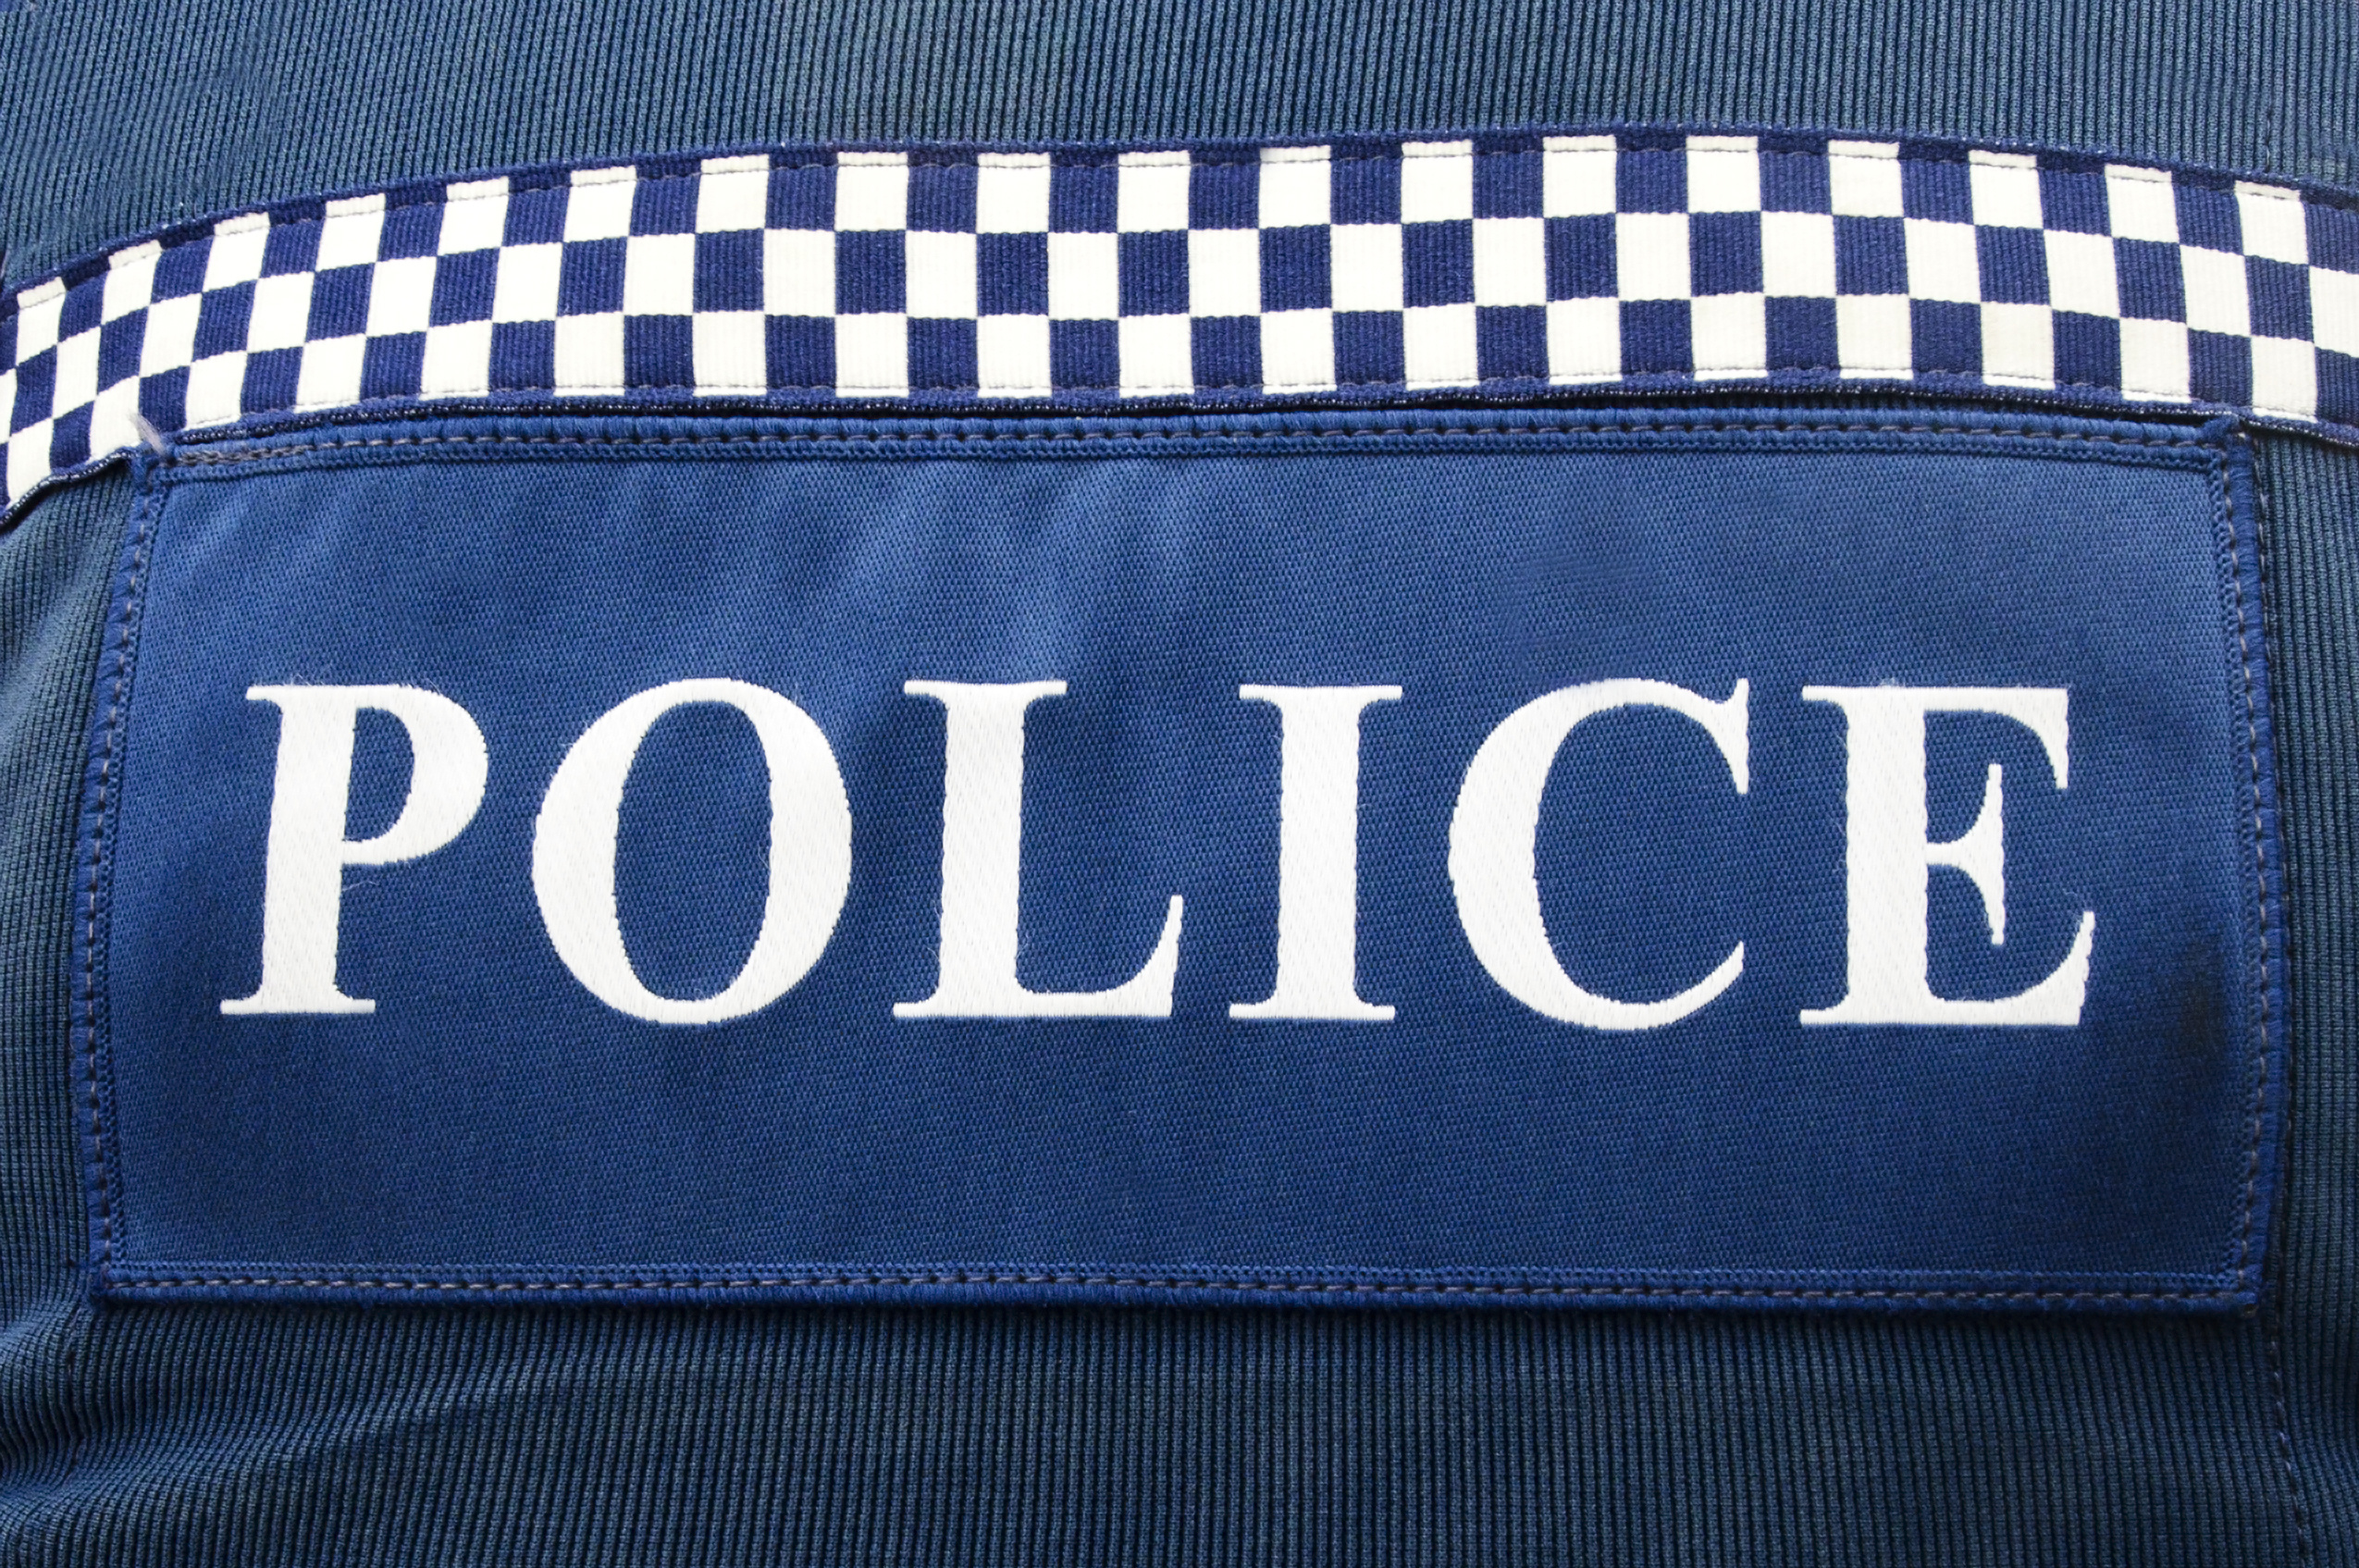 Close-up of NZ Police logo on police uniform.